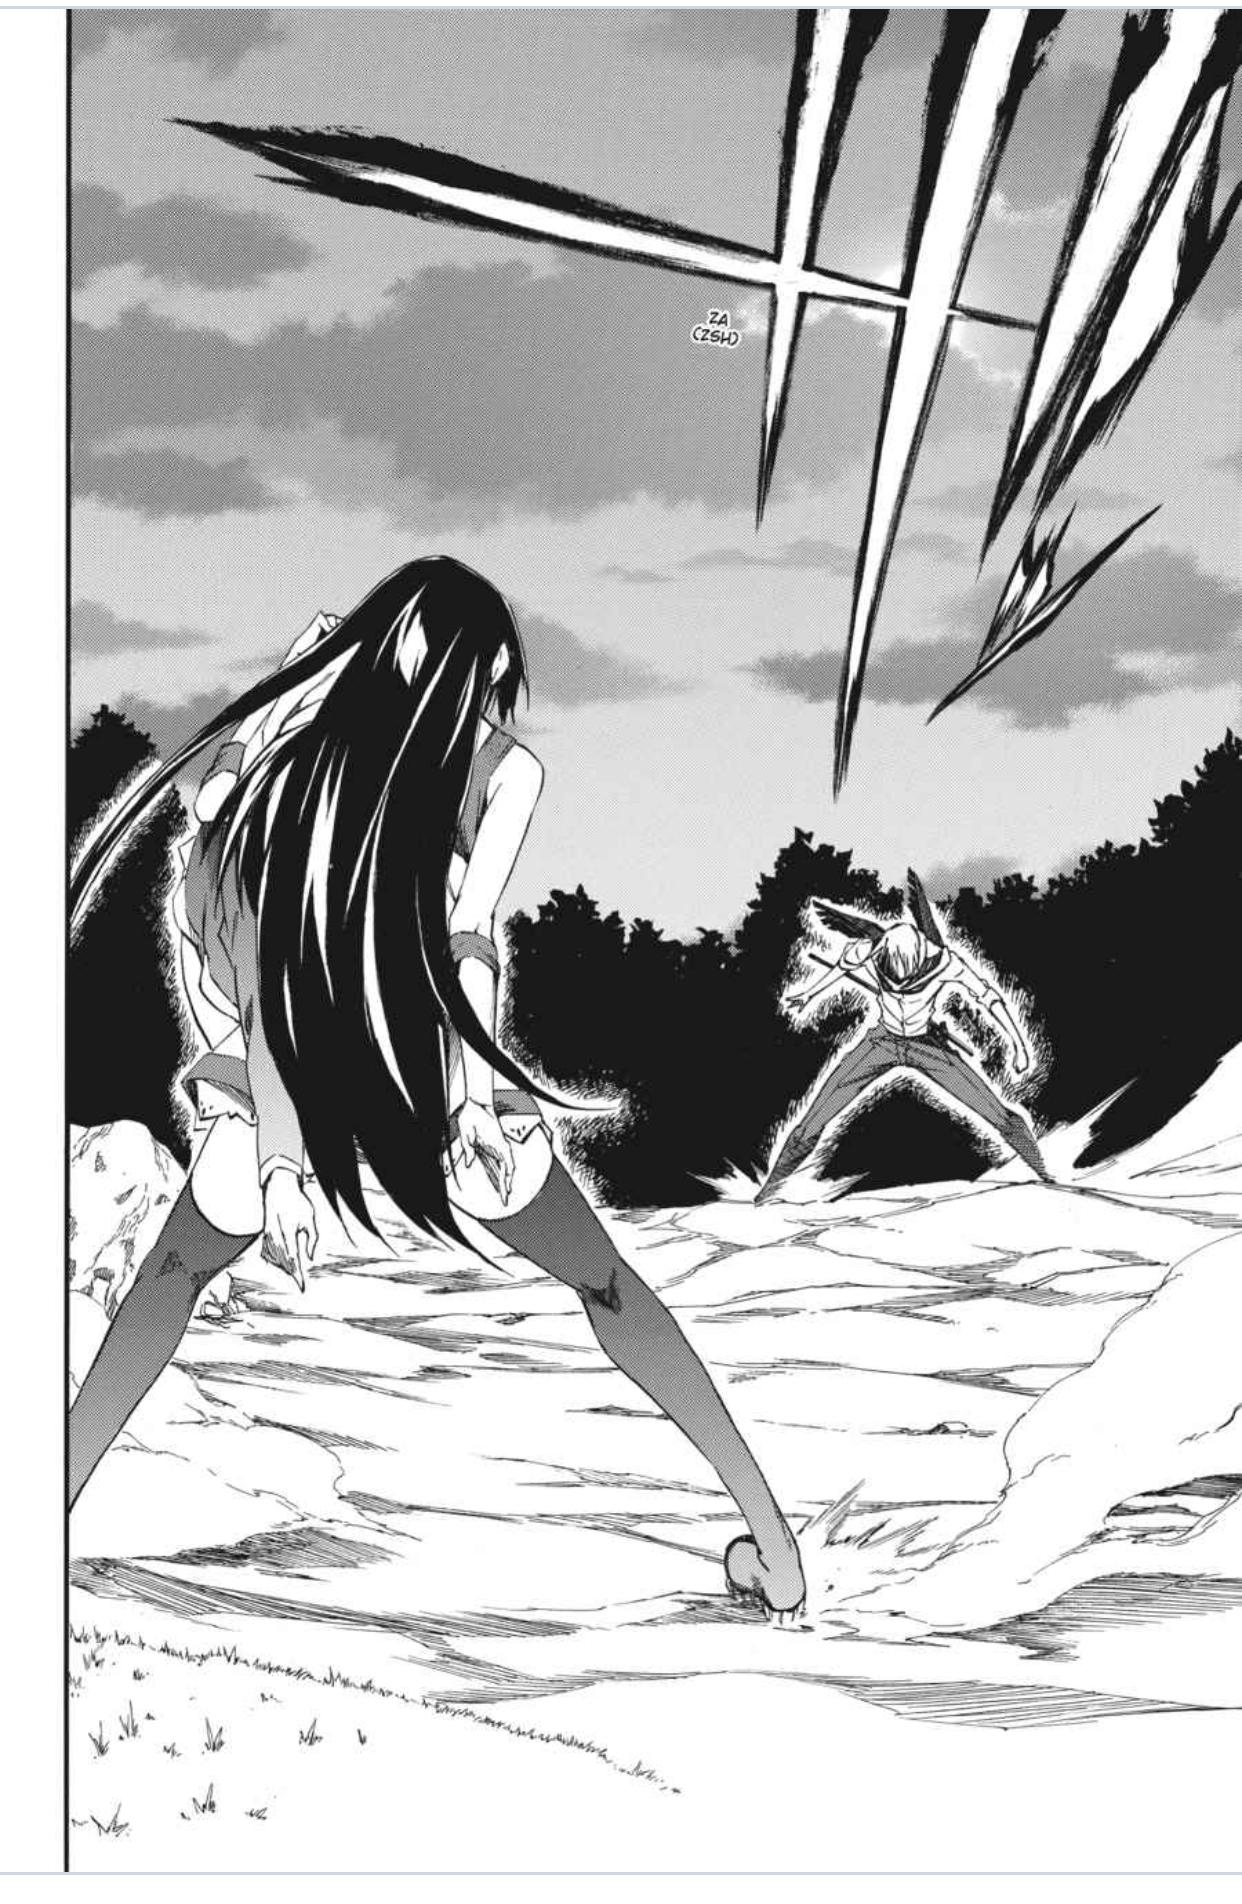 Akame ga KILL! Zero Ch.60 Page 2 - Mangago